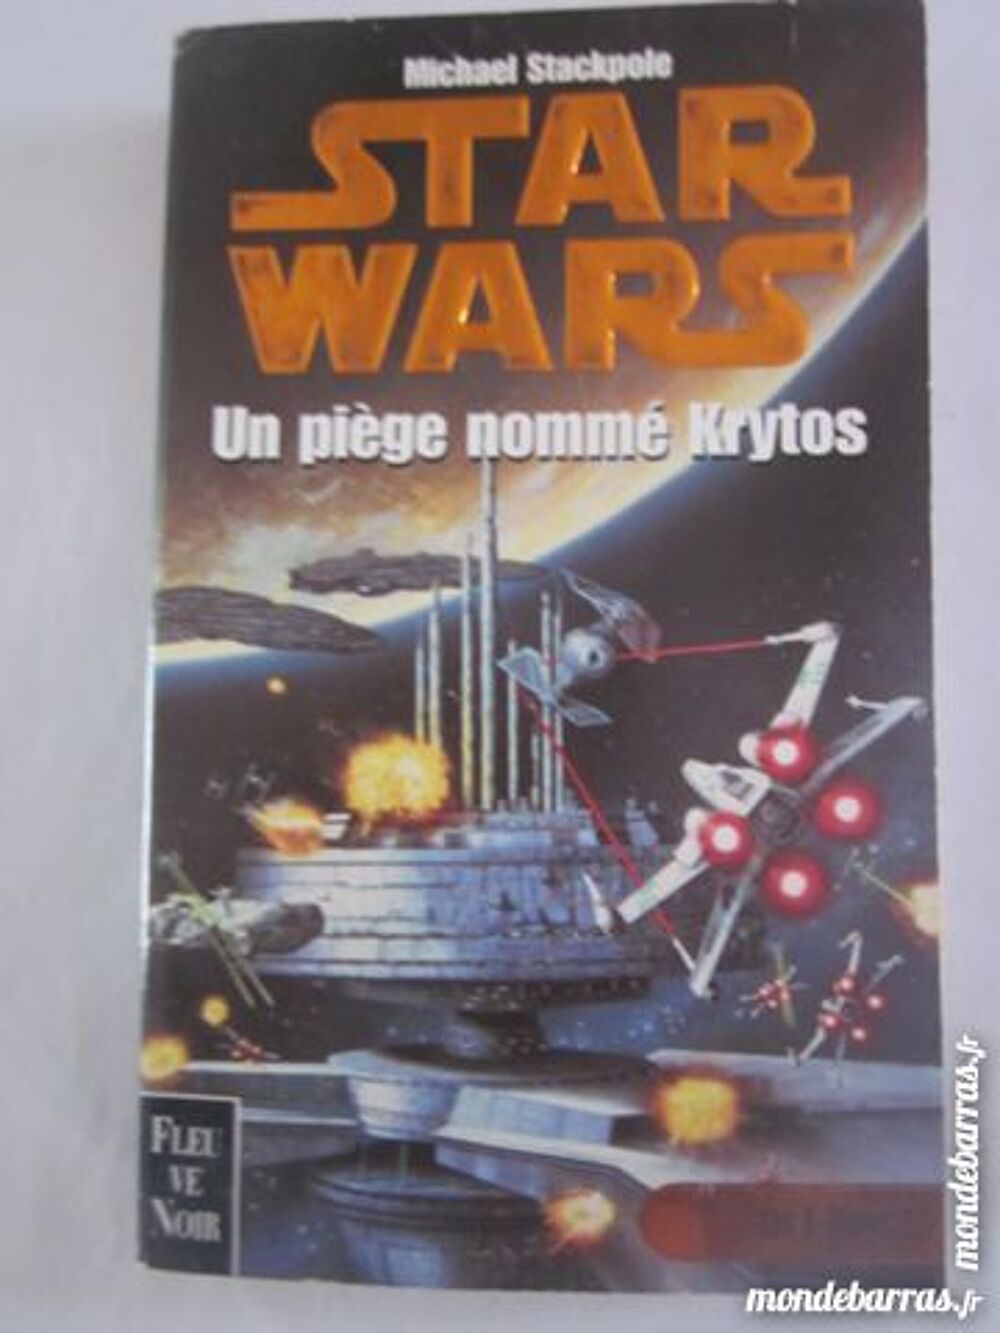 STAR WARS - UN PIEGE NOMME KRYTOS Livres et BD